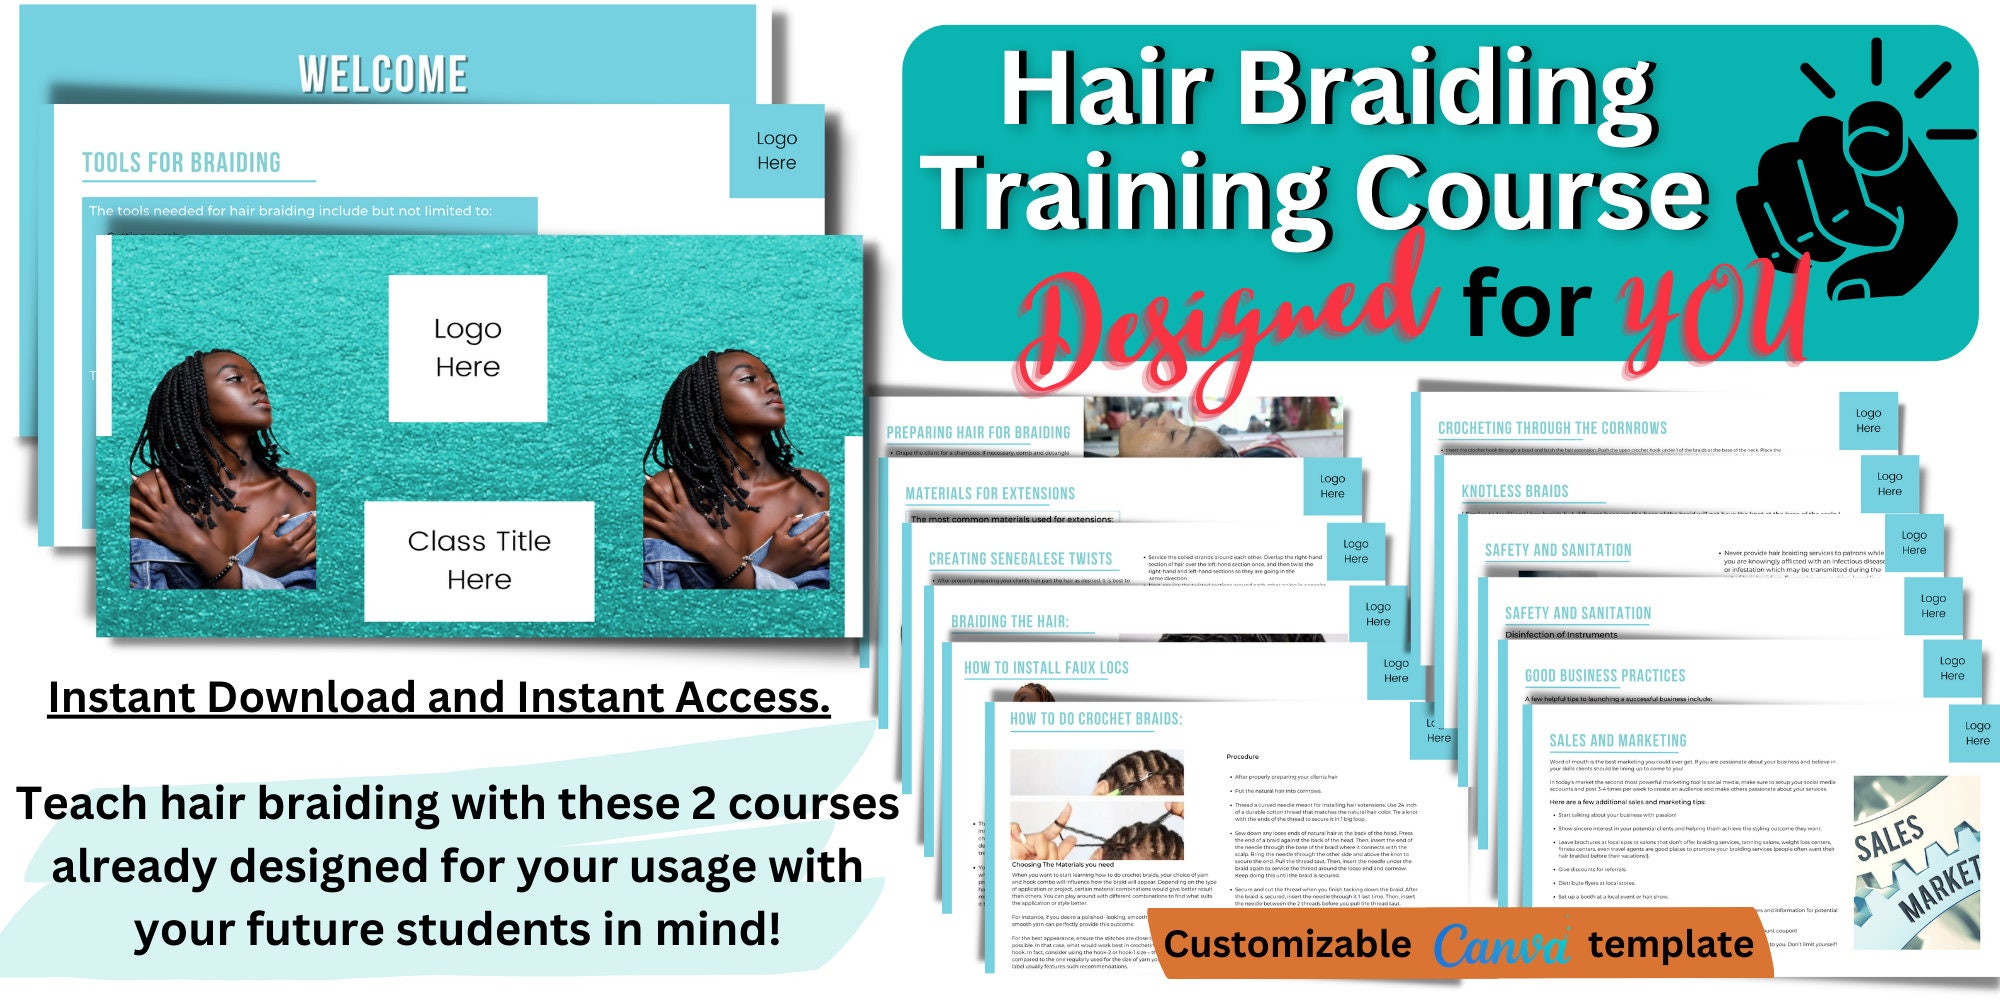 Hair Braiding Class Training Manual Braiding Training Guide image pic